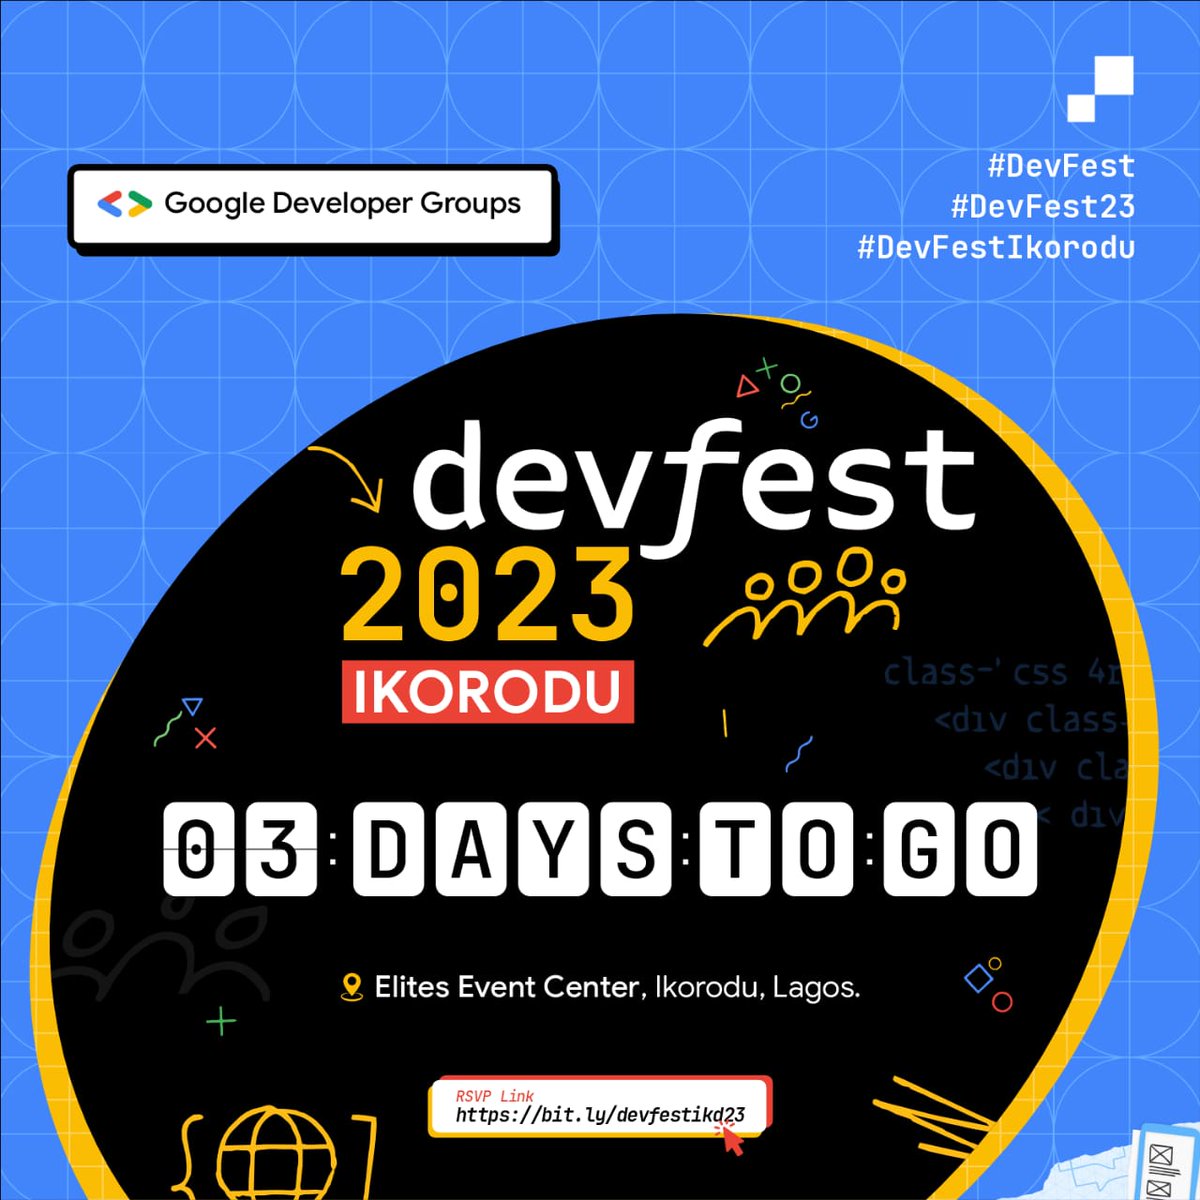 Tick-tock! Just 3 days left until the #devfest Ikorodu.

Don't miss the excitement and register below!👇

bitly.ws/34fDT

#devfest23
#devfestIkorodu